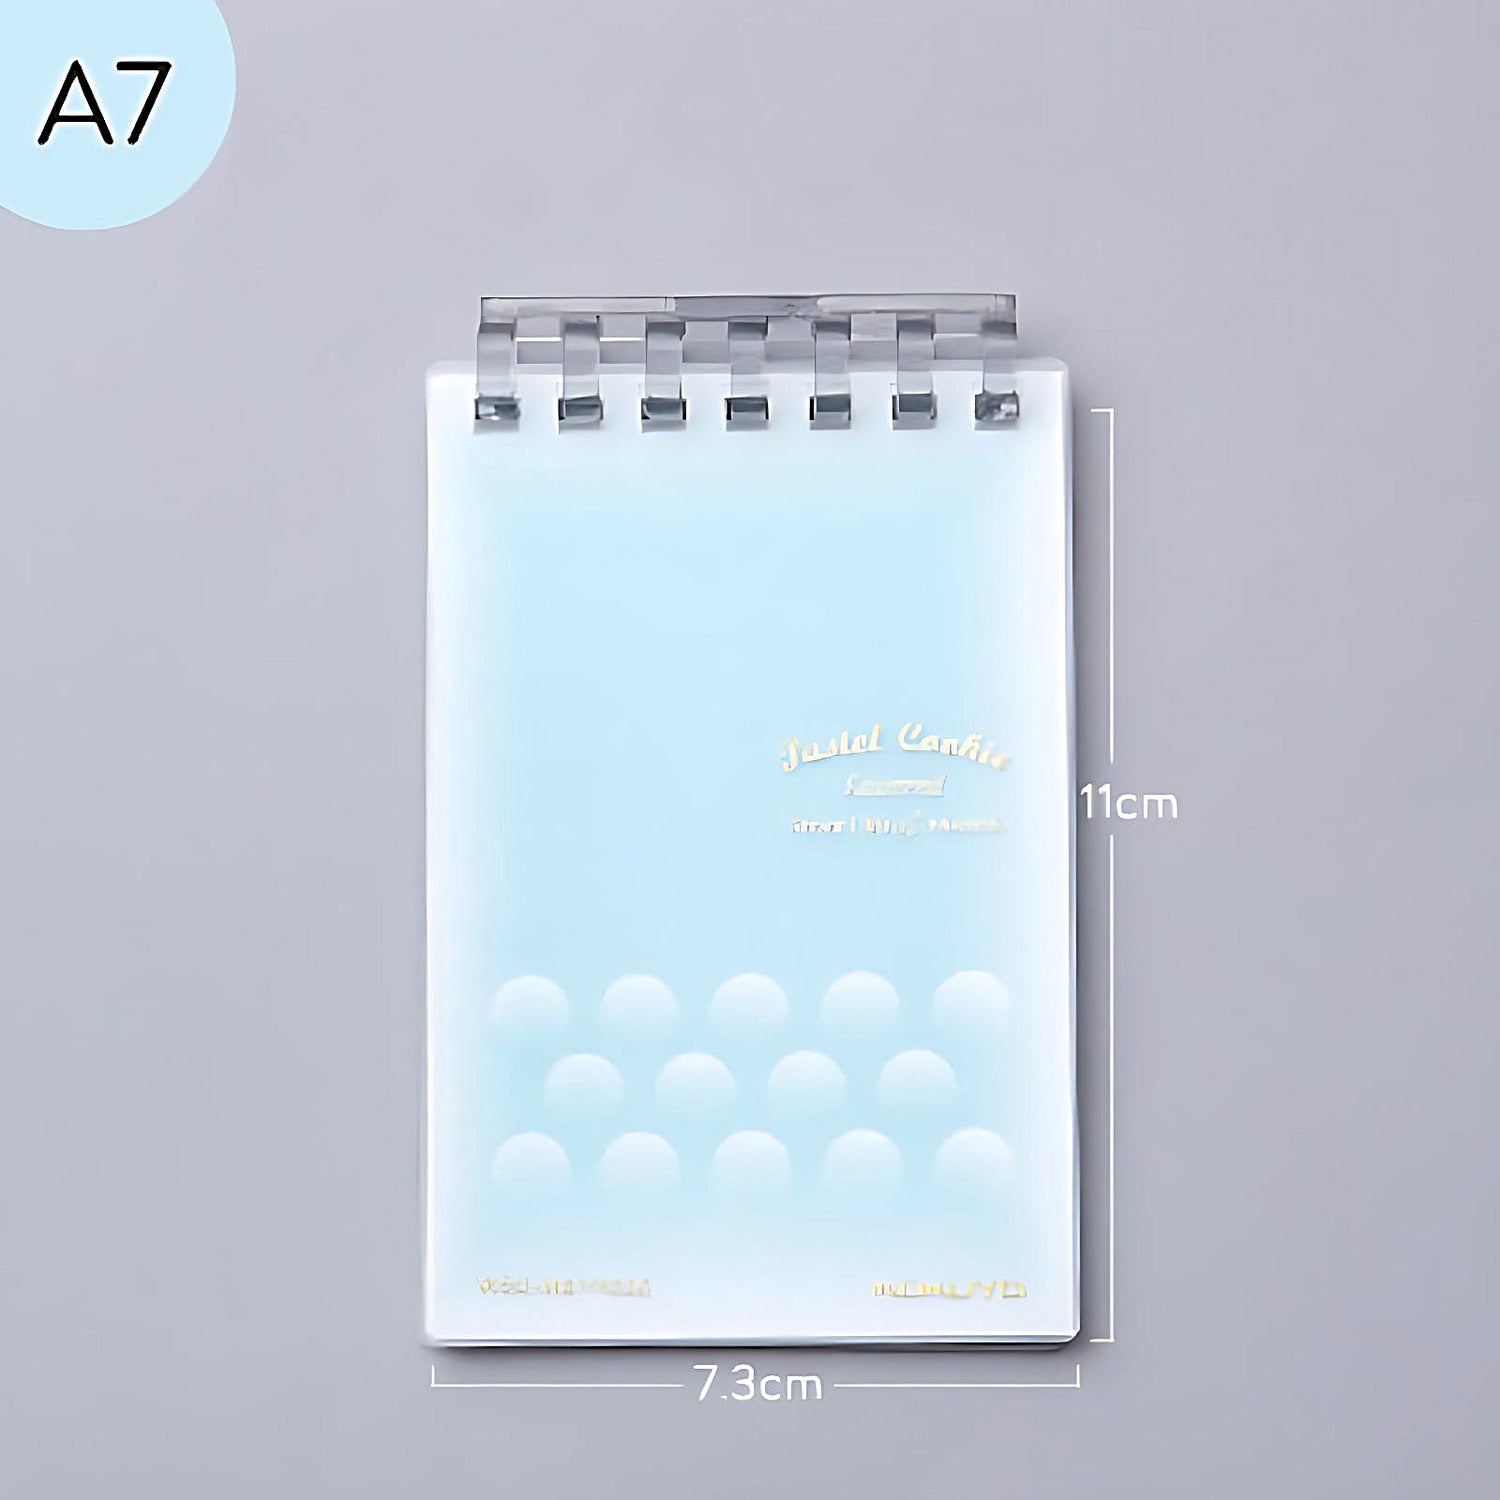 a blue Kokuyo Smart Ring memo pad on a grey background